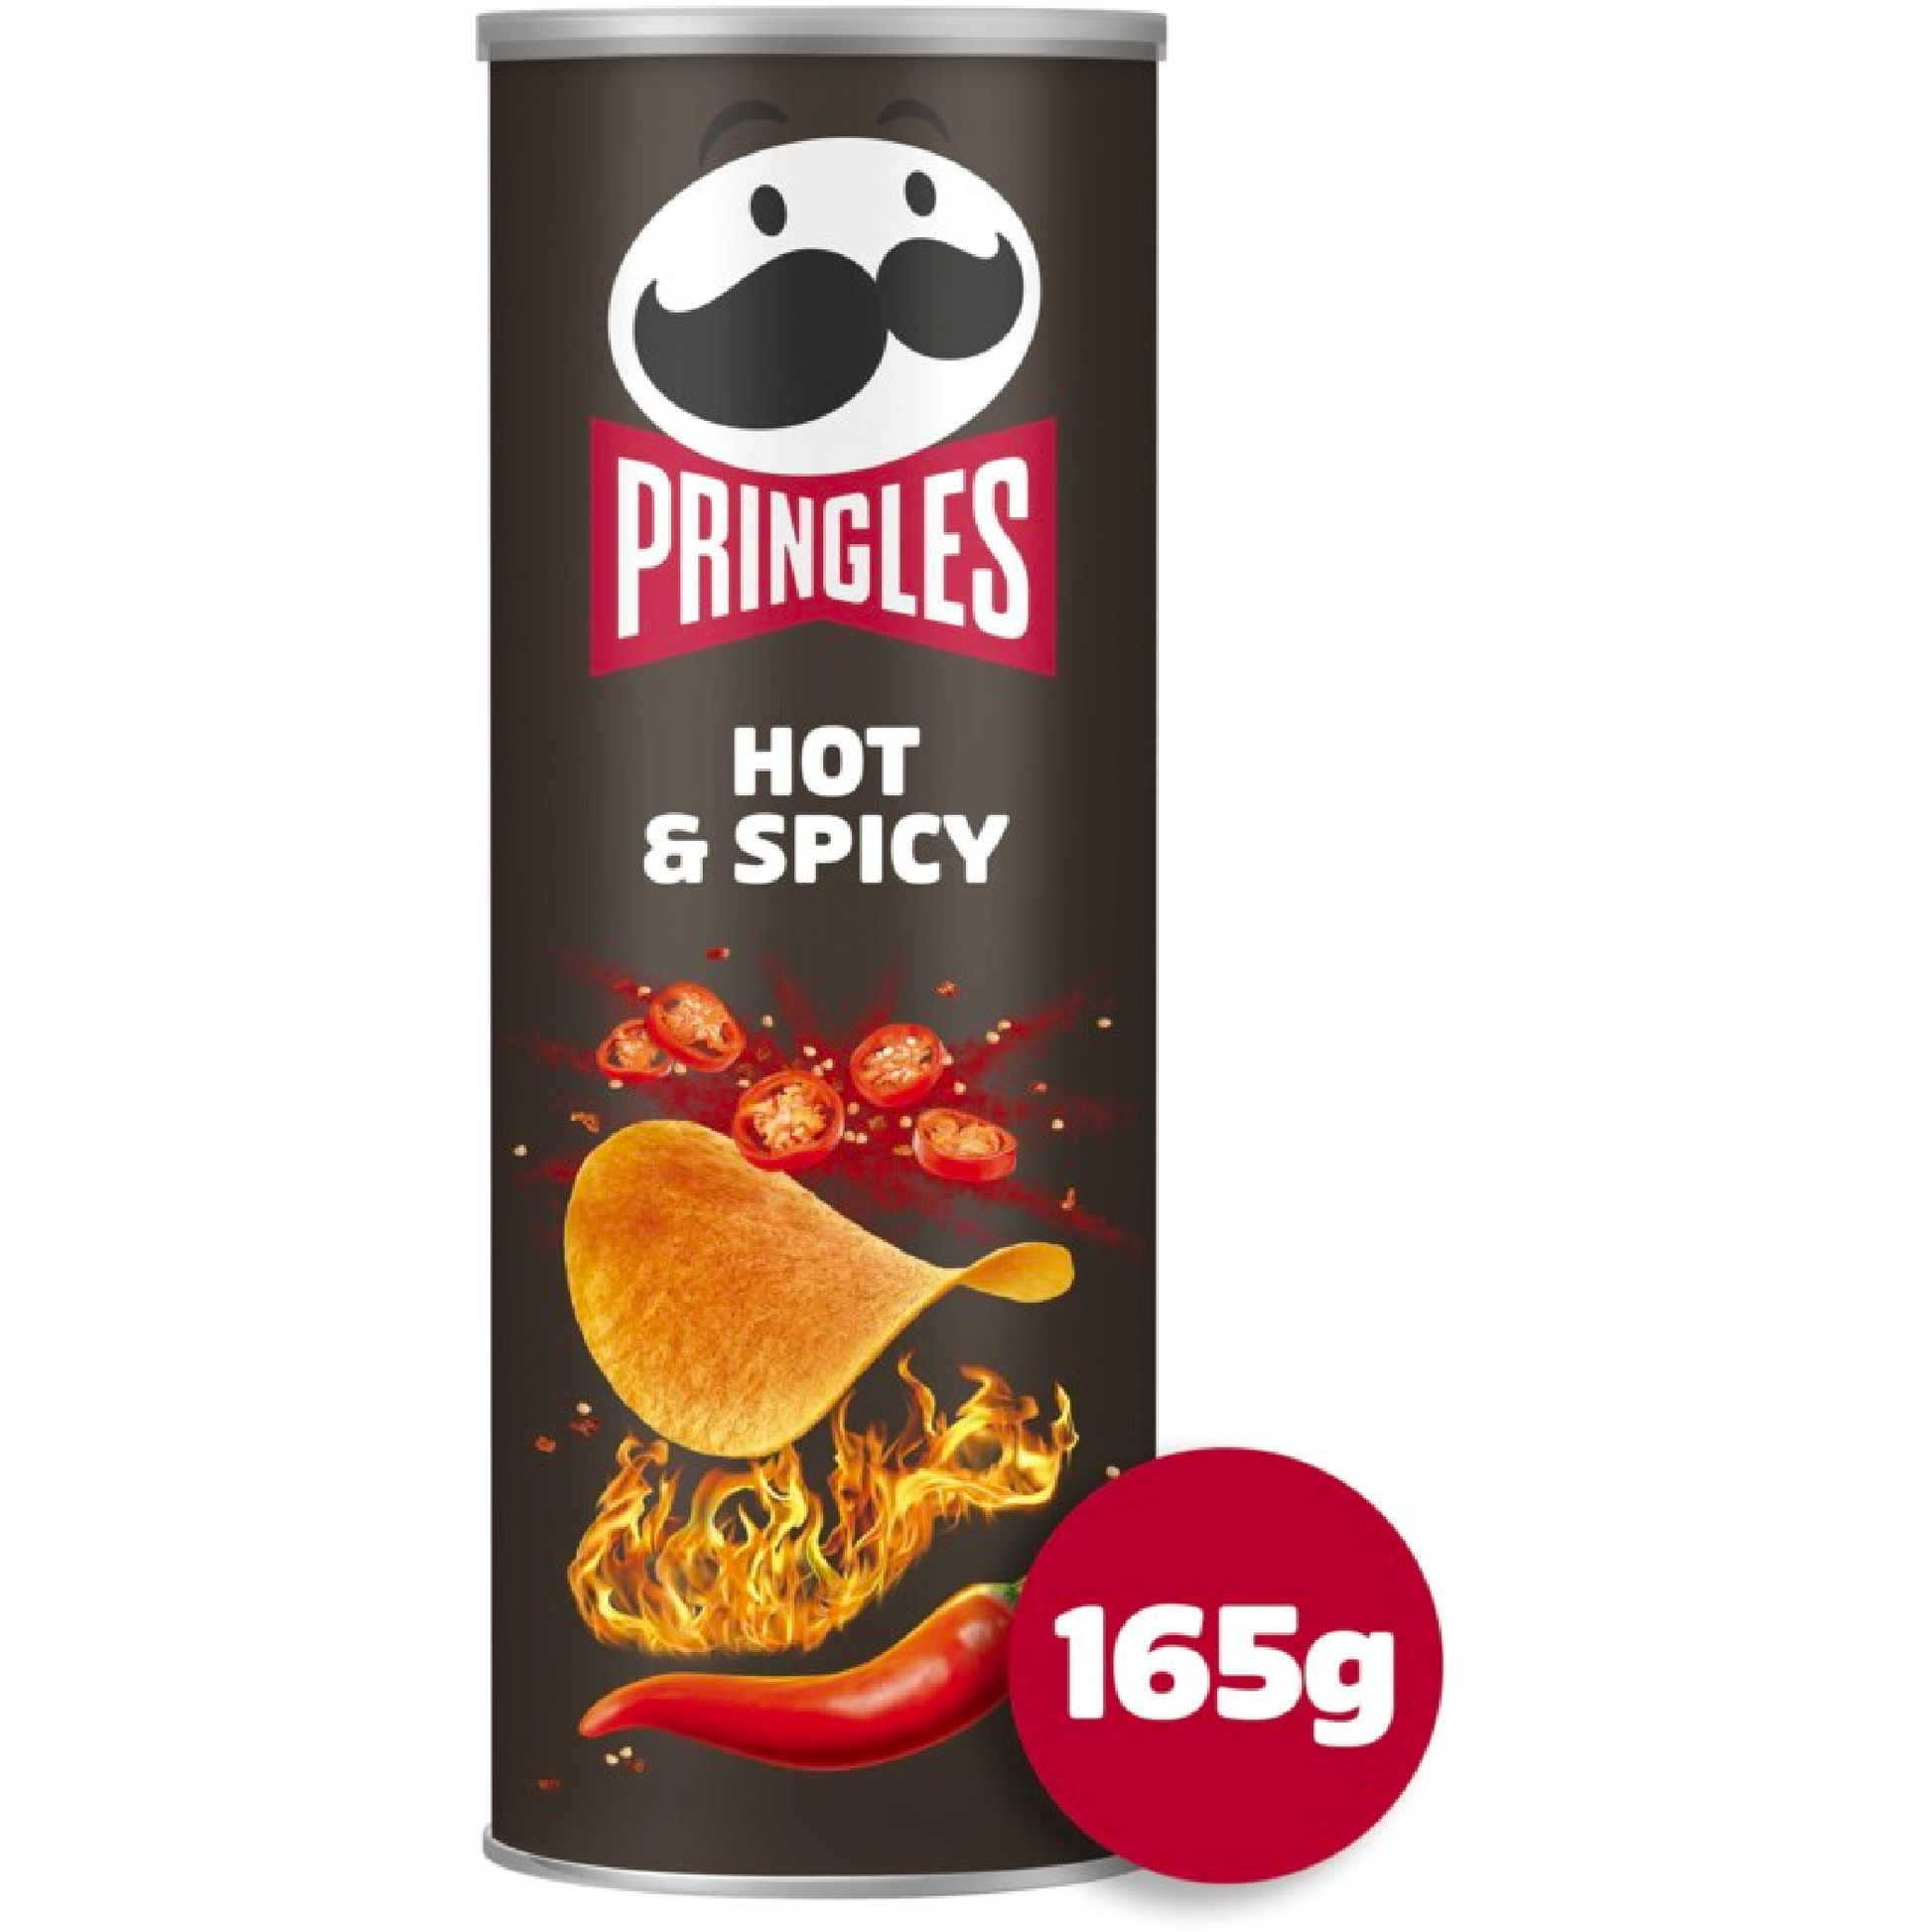 Pringles Hot & Spicy 165g - Snack-It